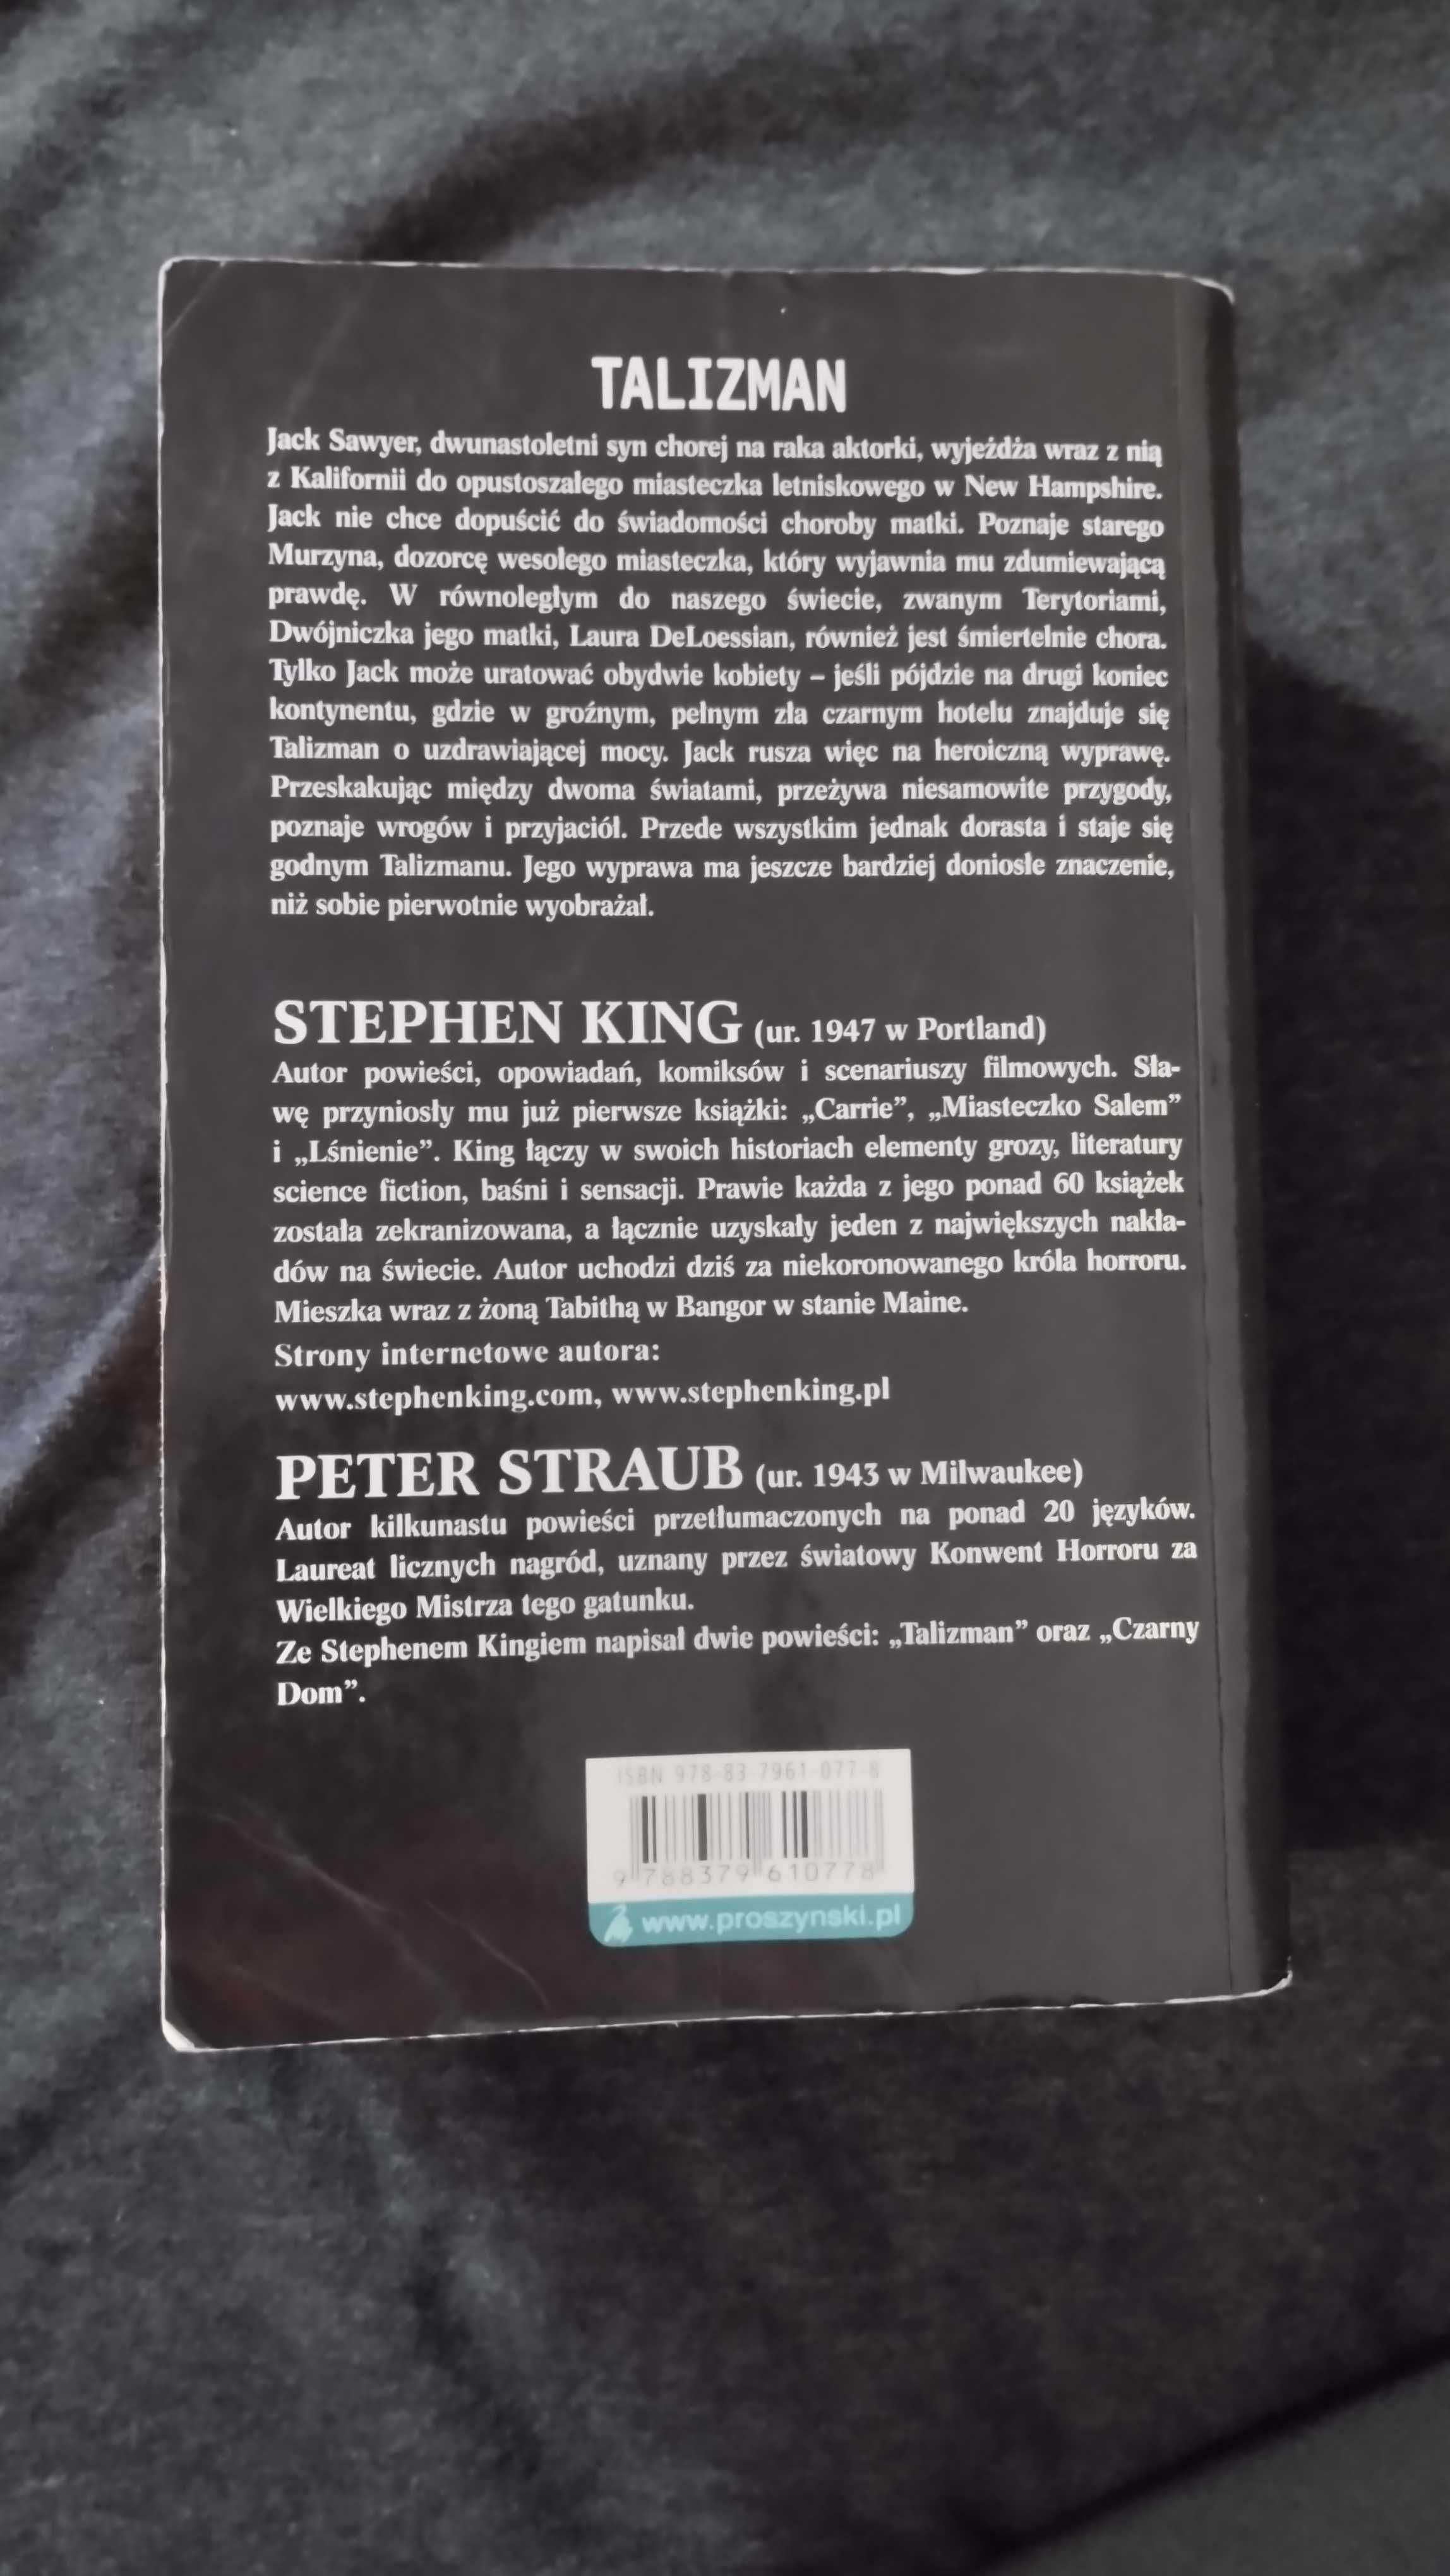 Stephen King, Peter Straub - "Talizman"